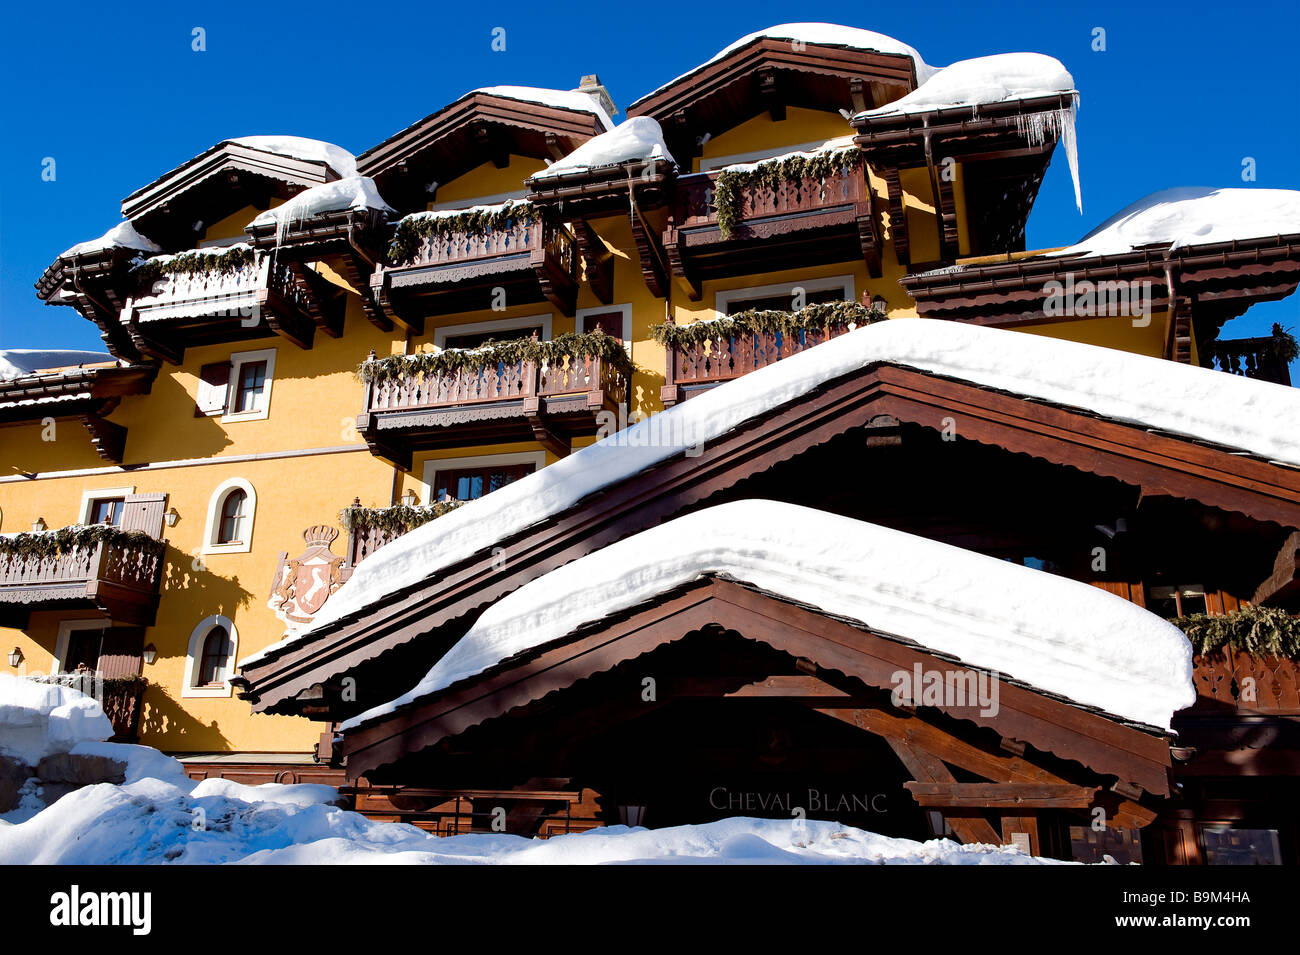 Cheval Blanc 5 Star, Luxury Ski Hotels Courchevel 1850